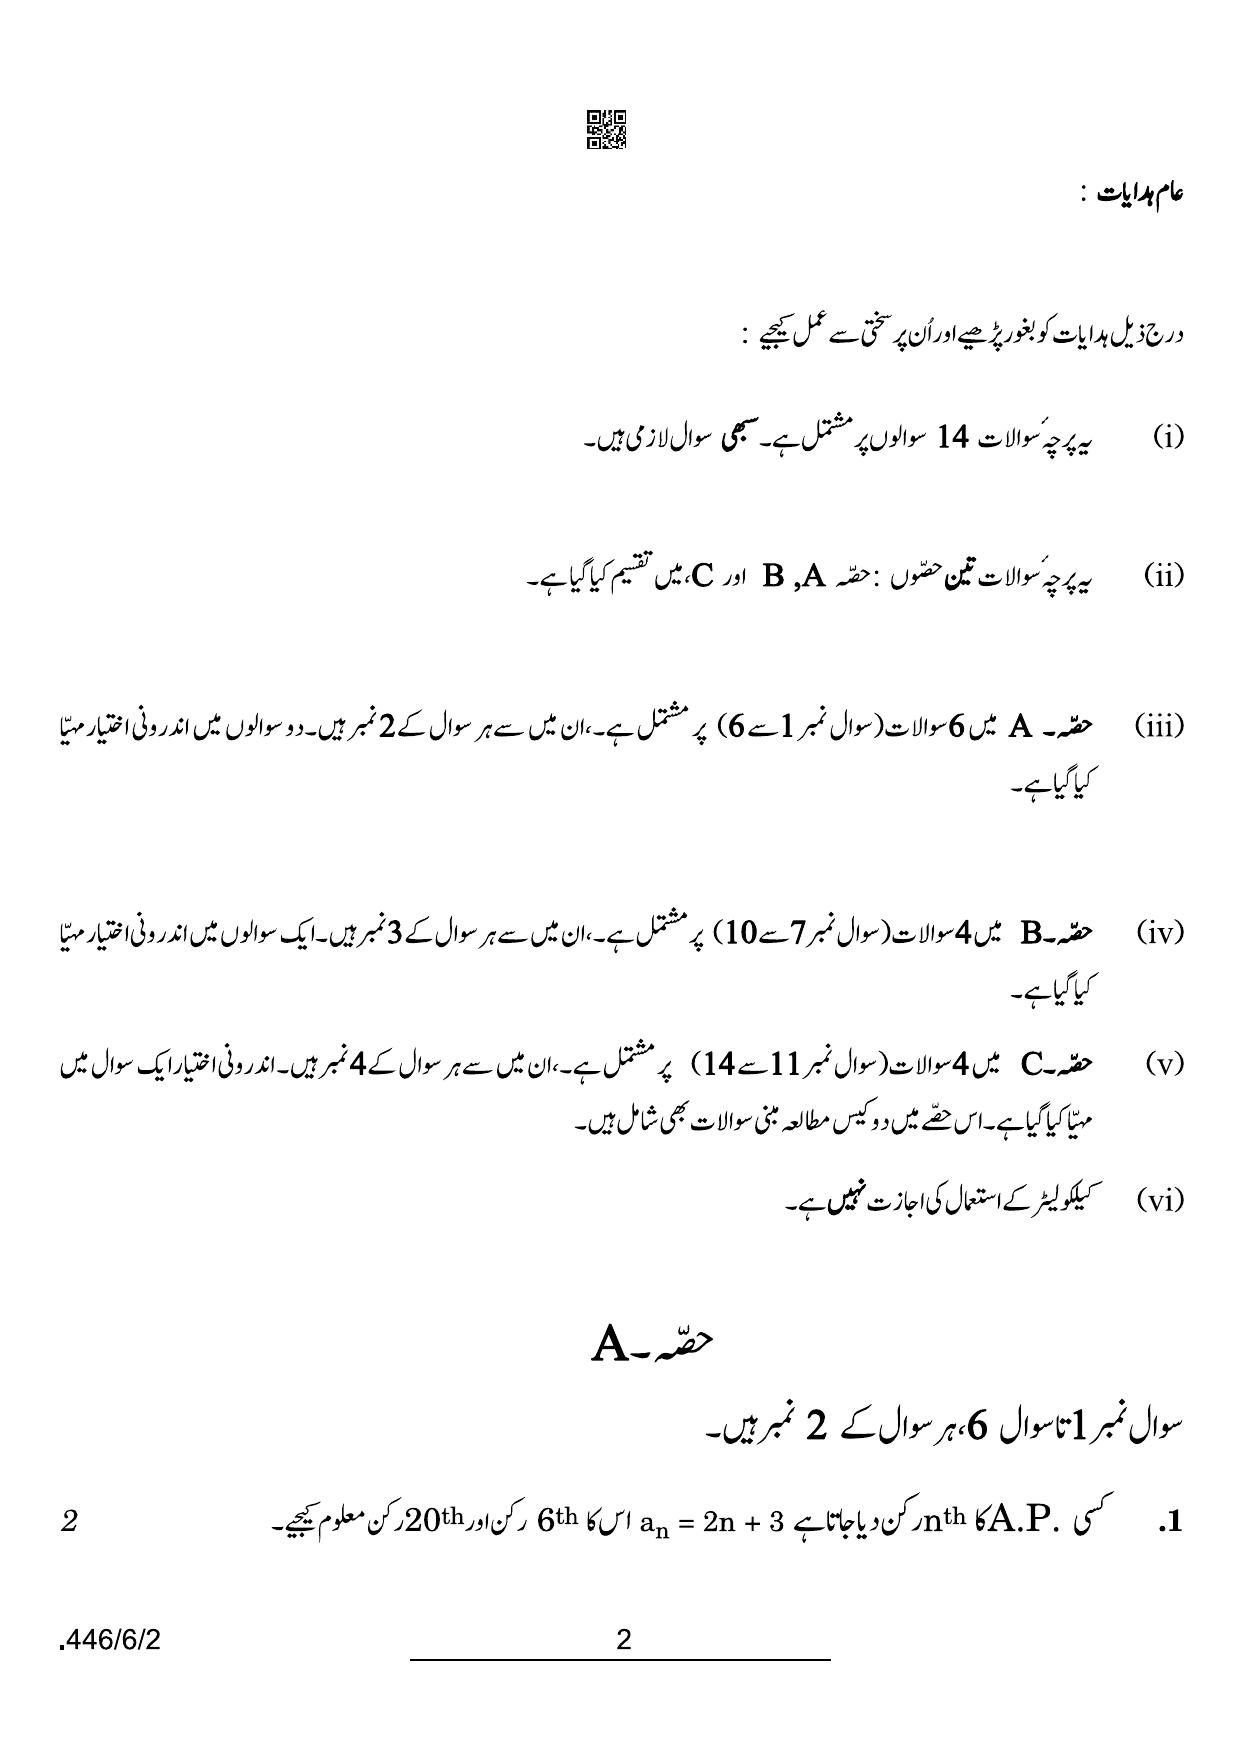 CBSE Class 10 446-6-2 Maths Basic Urdu 2022 Compartment Question Paper - Page 2